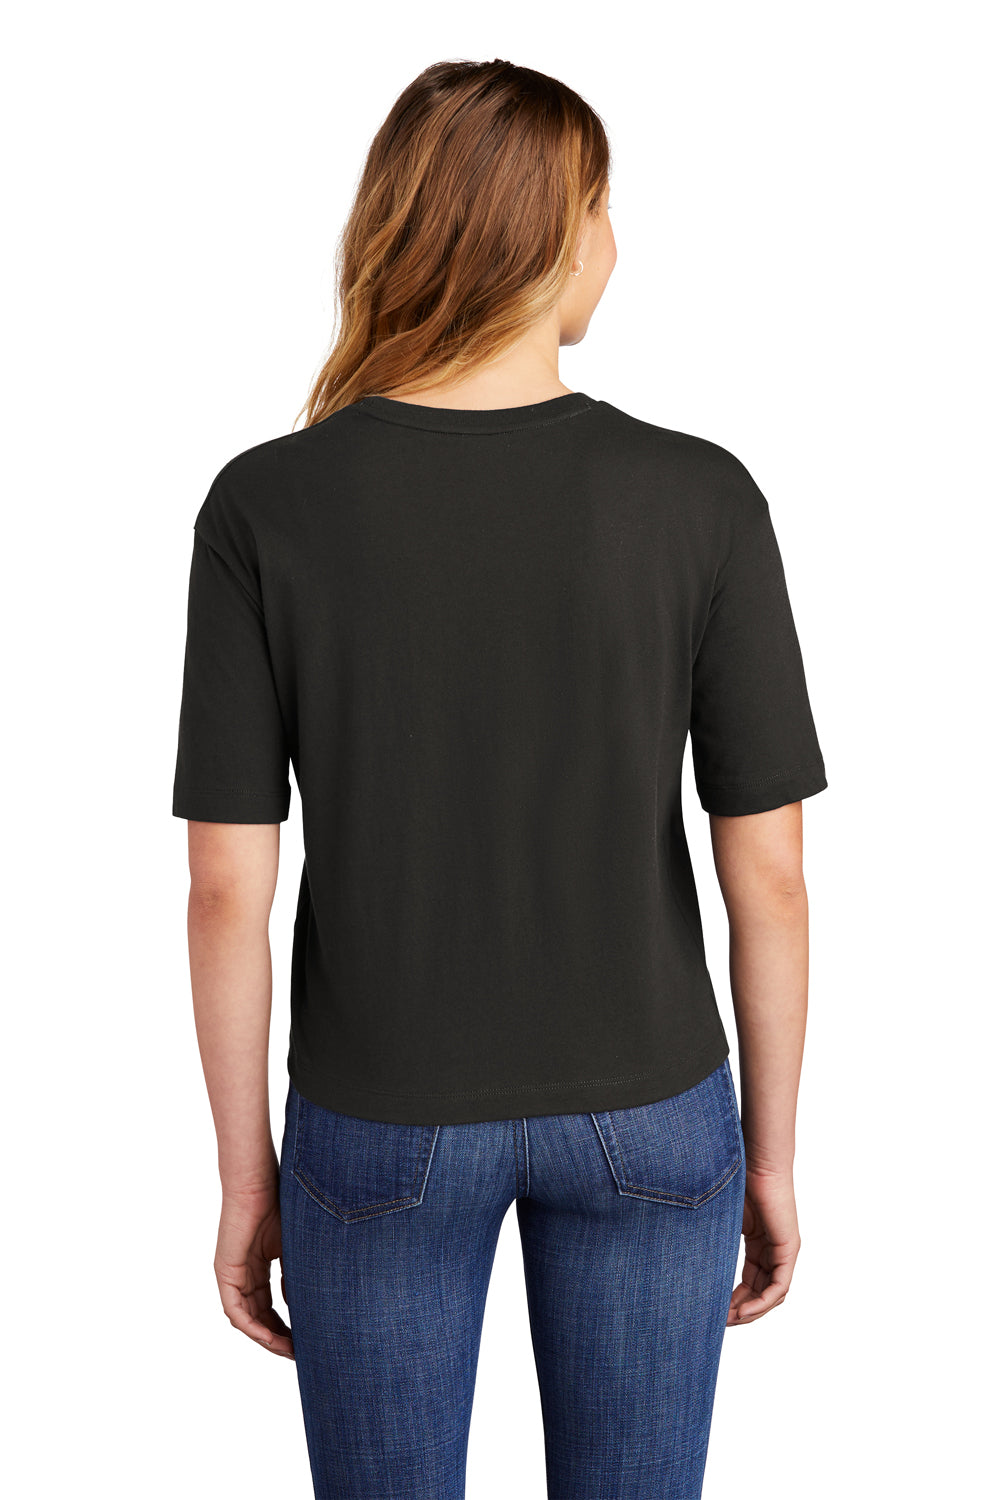 District Womens Very Important Boxy Short Sleeve Crewneck T-Shirt Black Side